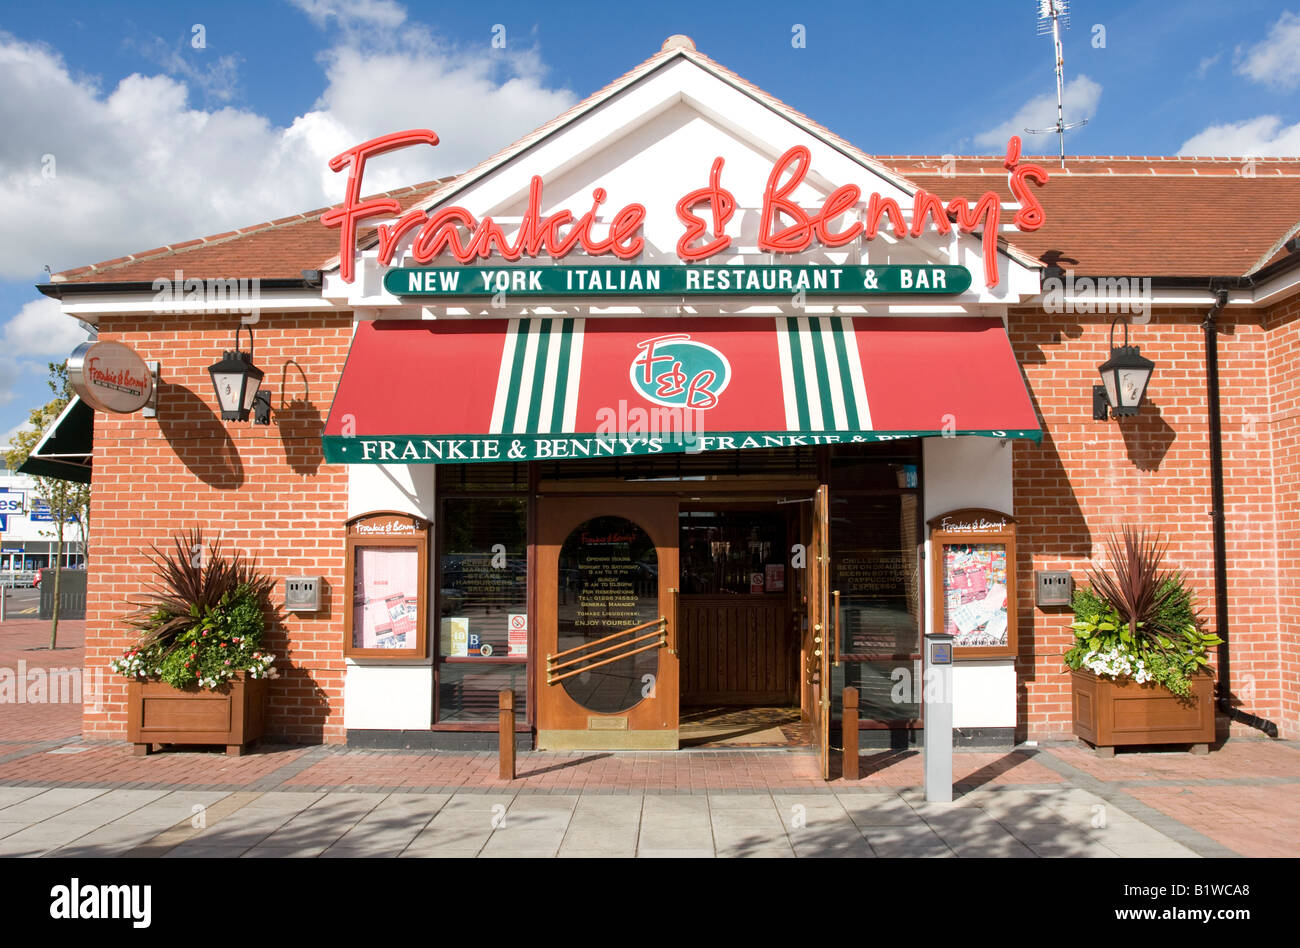 Frankie and Benny's New York Italian Restaurant & Bar - Aylesbury - Buckinghamshire Stock Photo